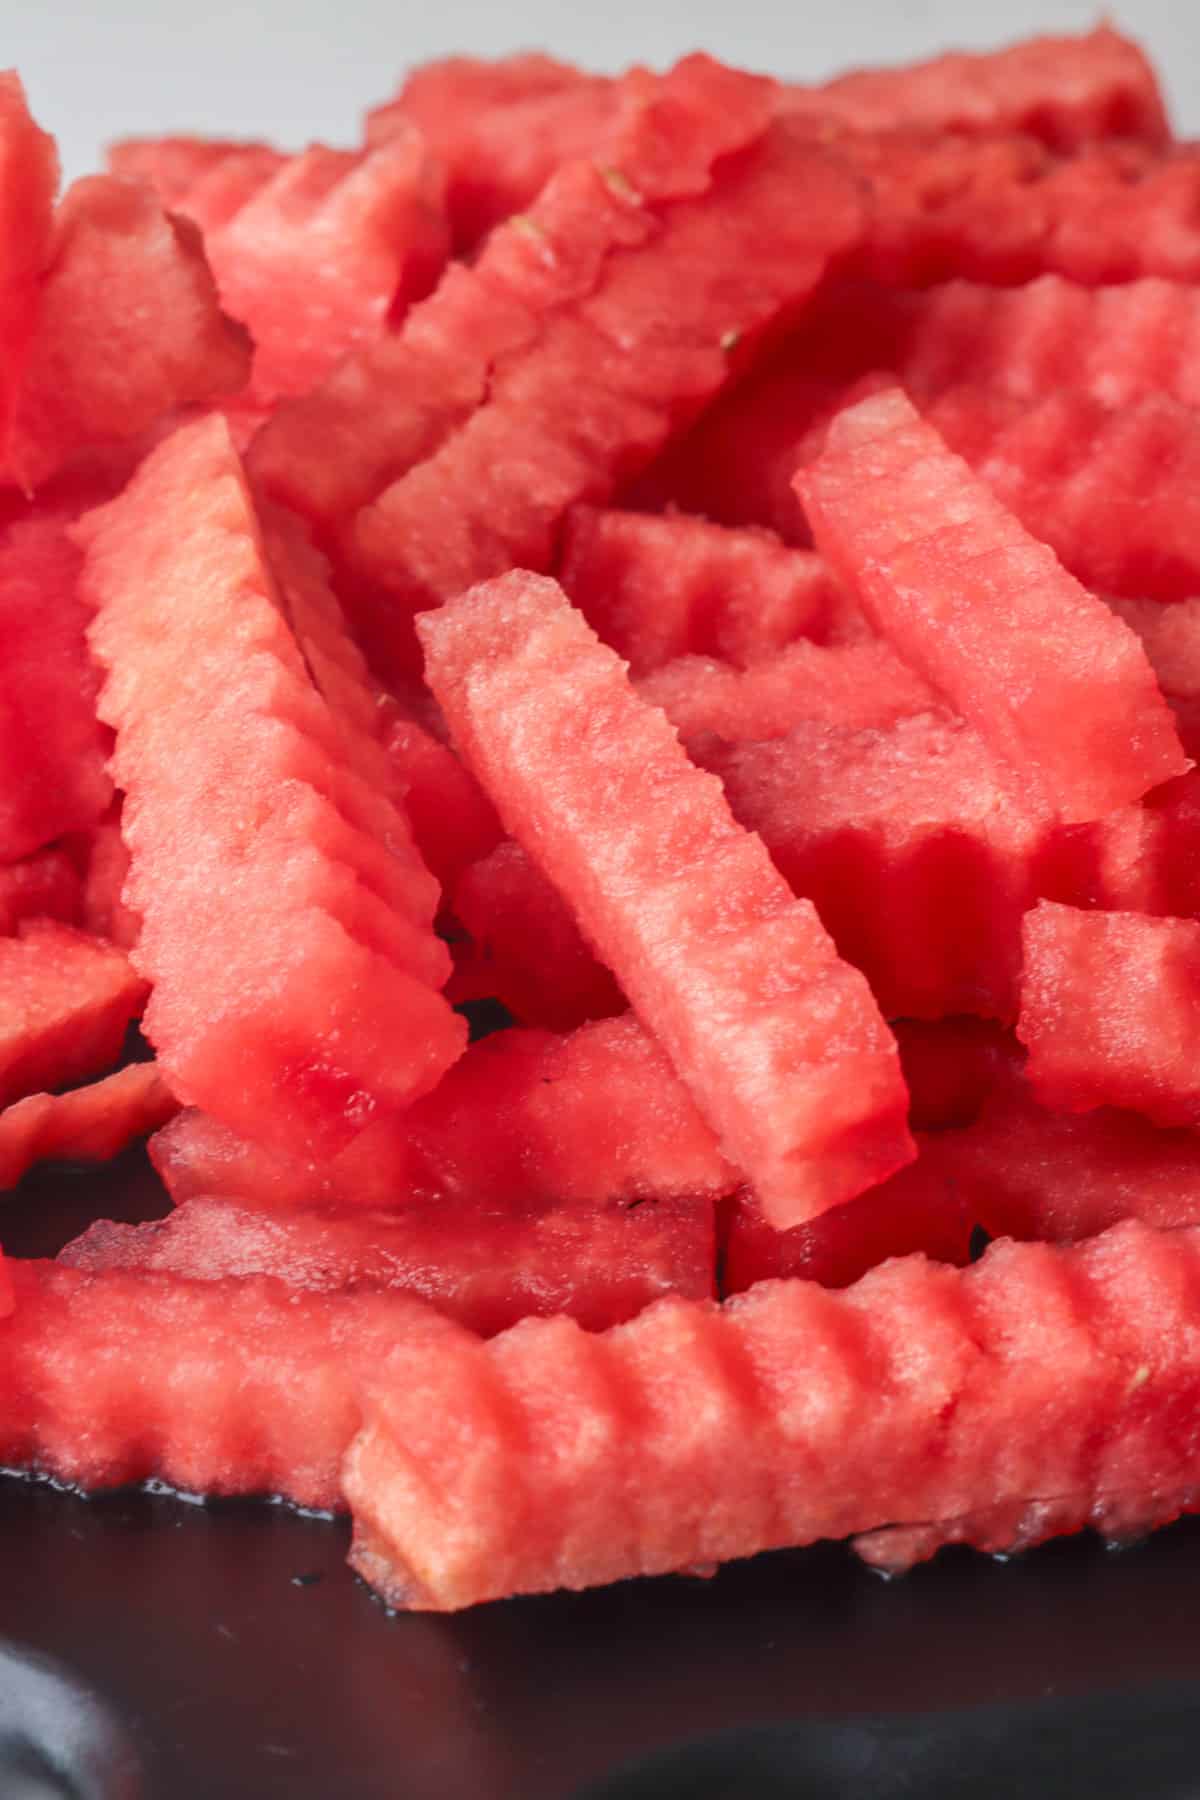 Watermelon cut into sticks.